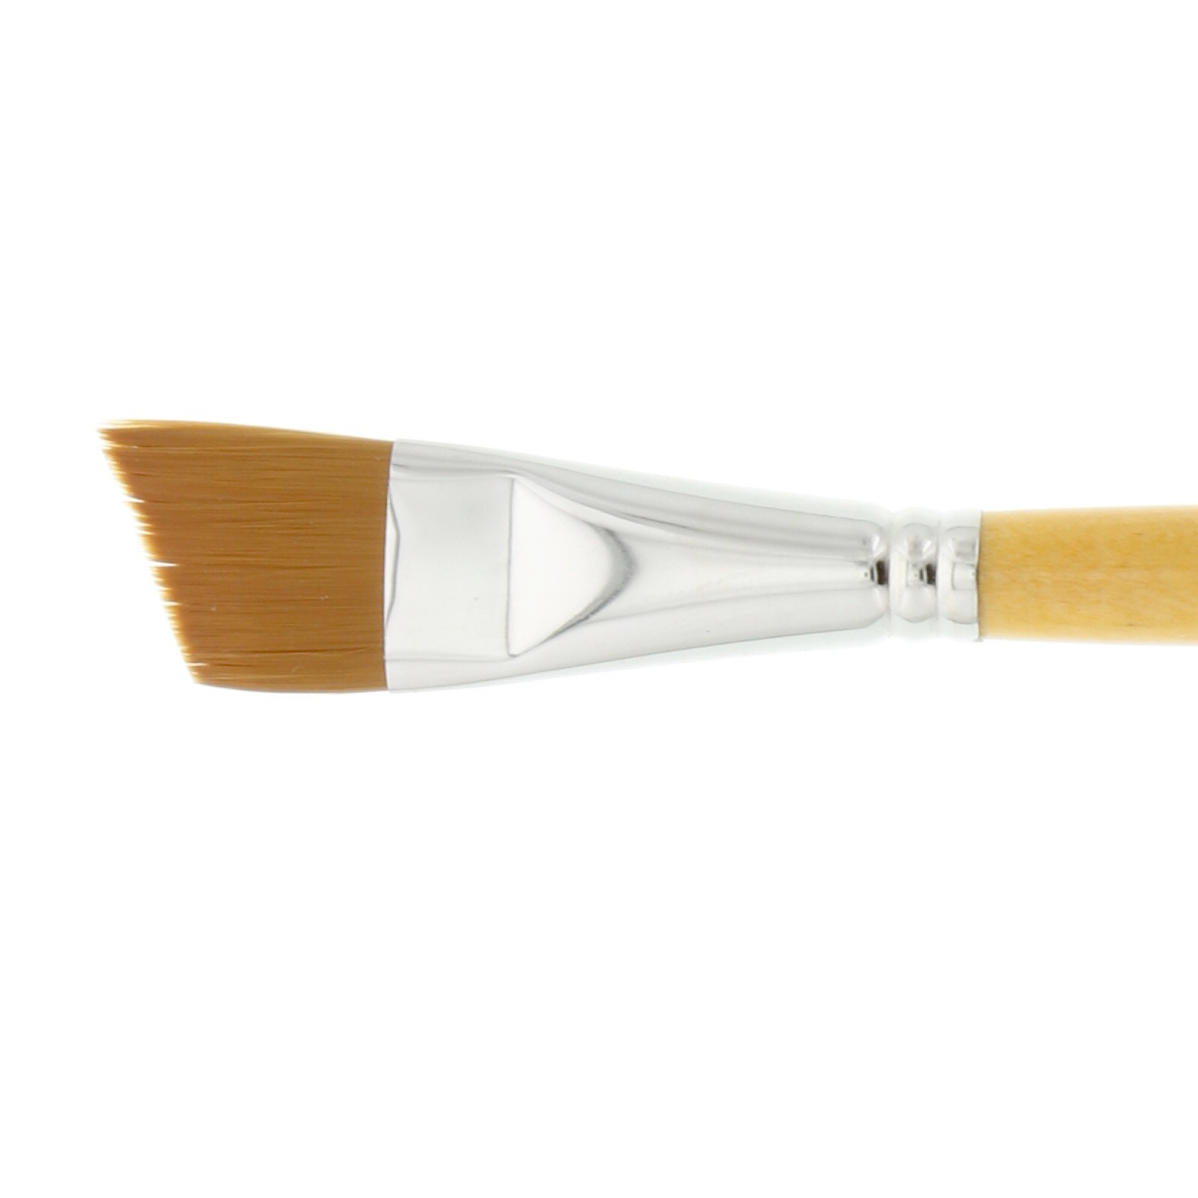 Princeton Series 9650 Snap! Golden Taklon Brushes - Artist